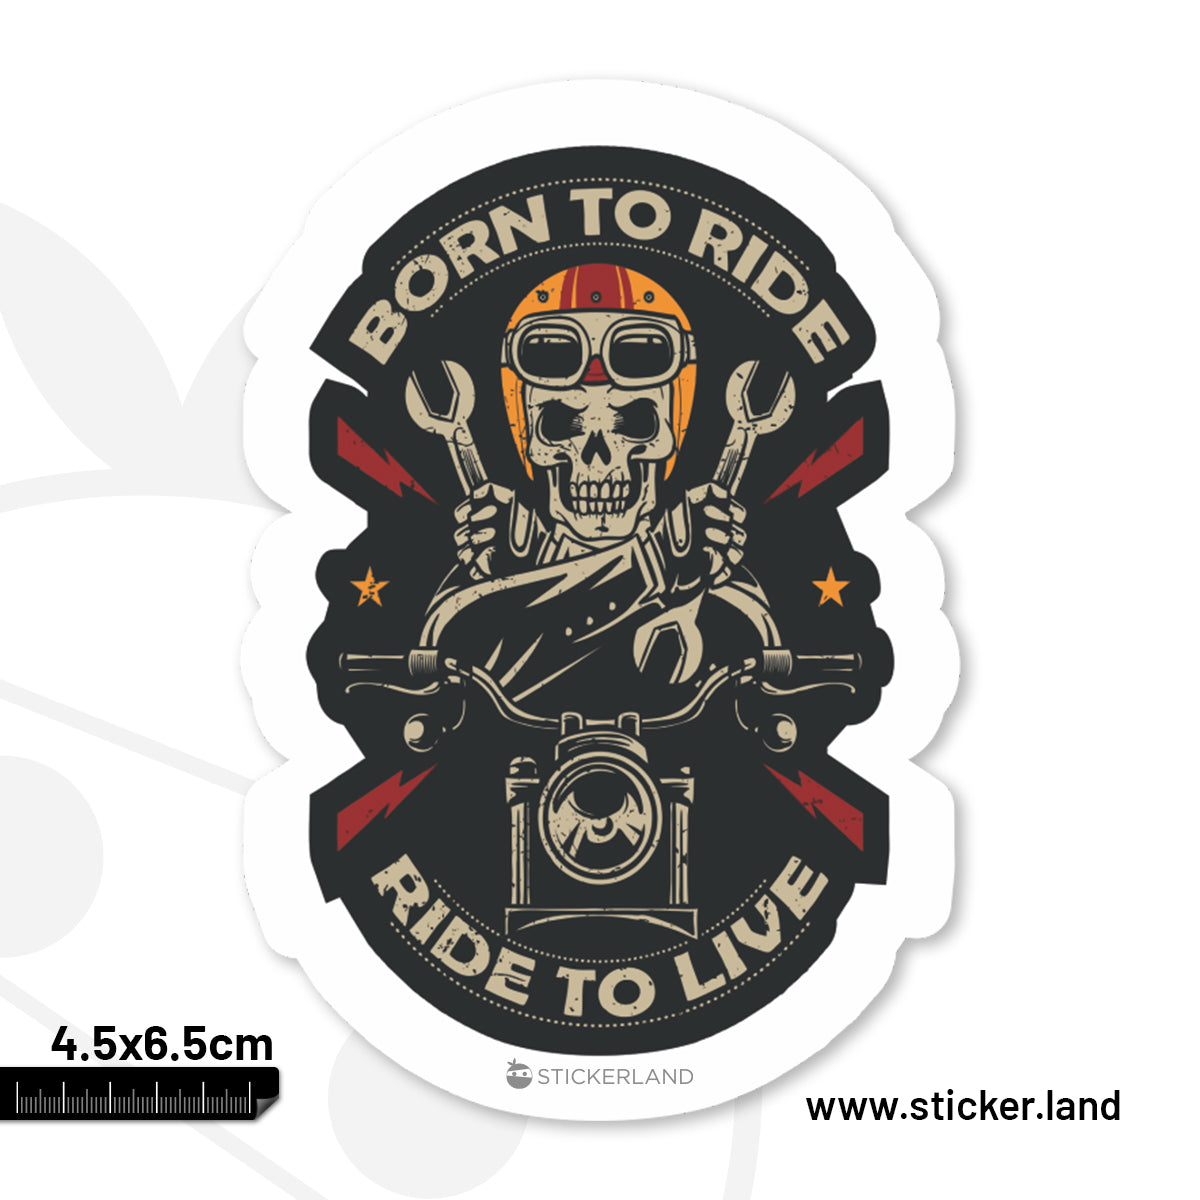 Born To Ride – Throttleart Moto Store